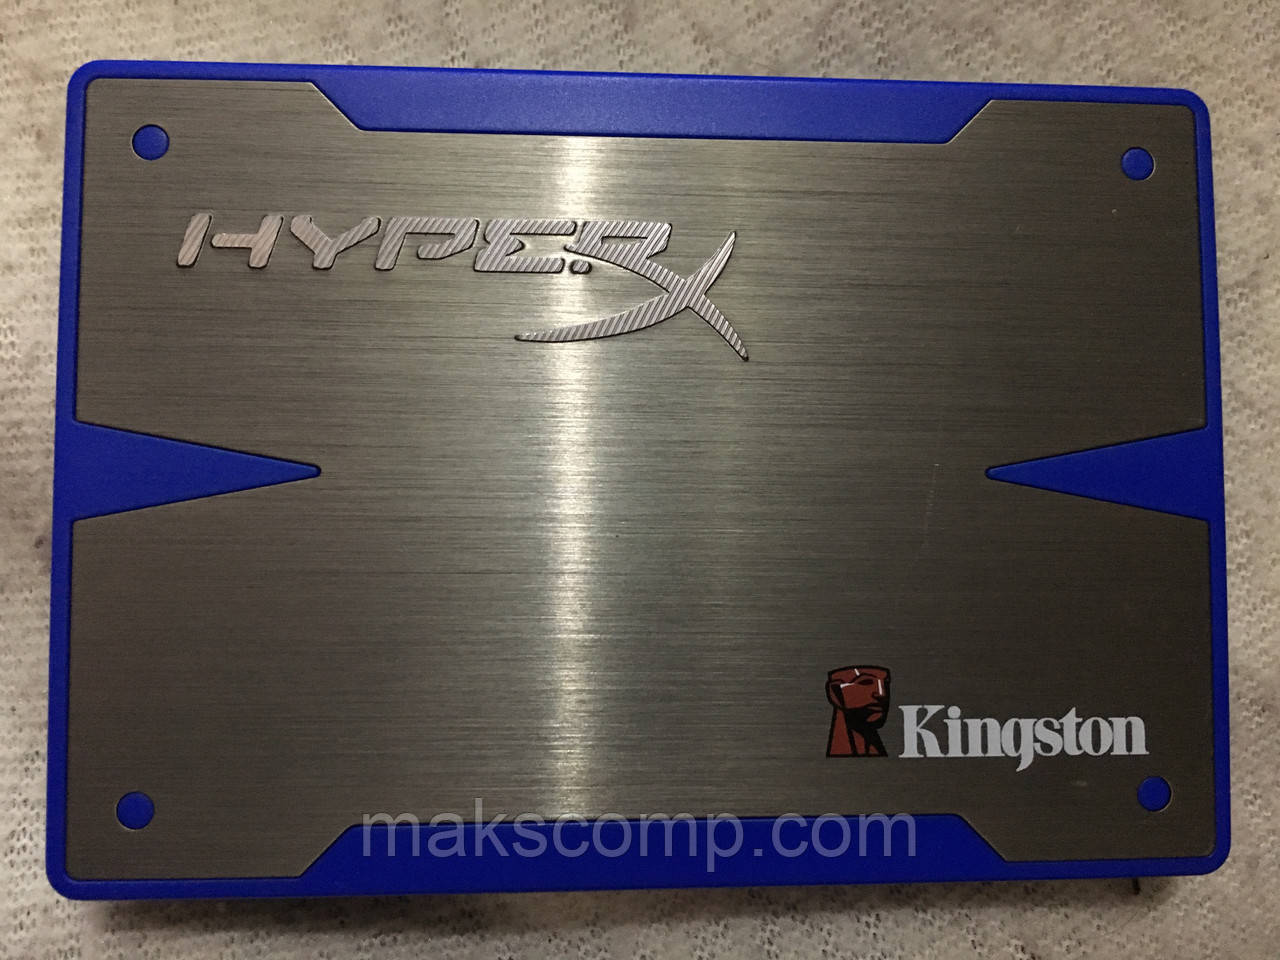 SSD Kingston xyperx 240GB 2.5" SATAIII MLC (SH100S3240G)